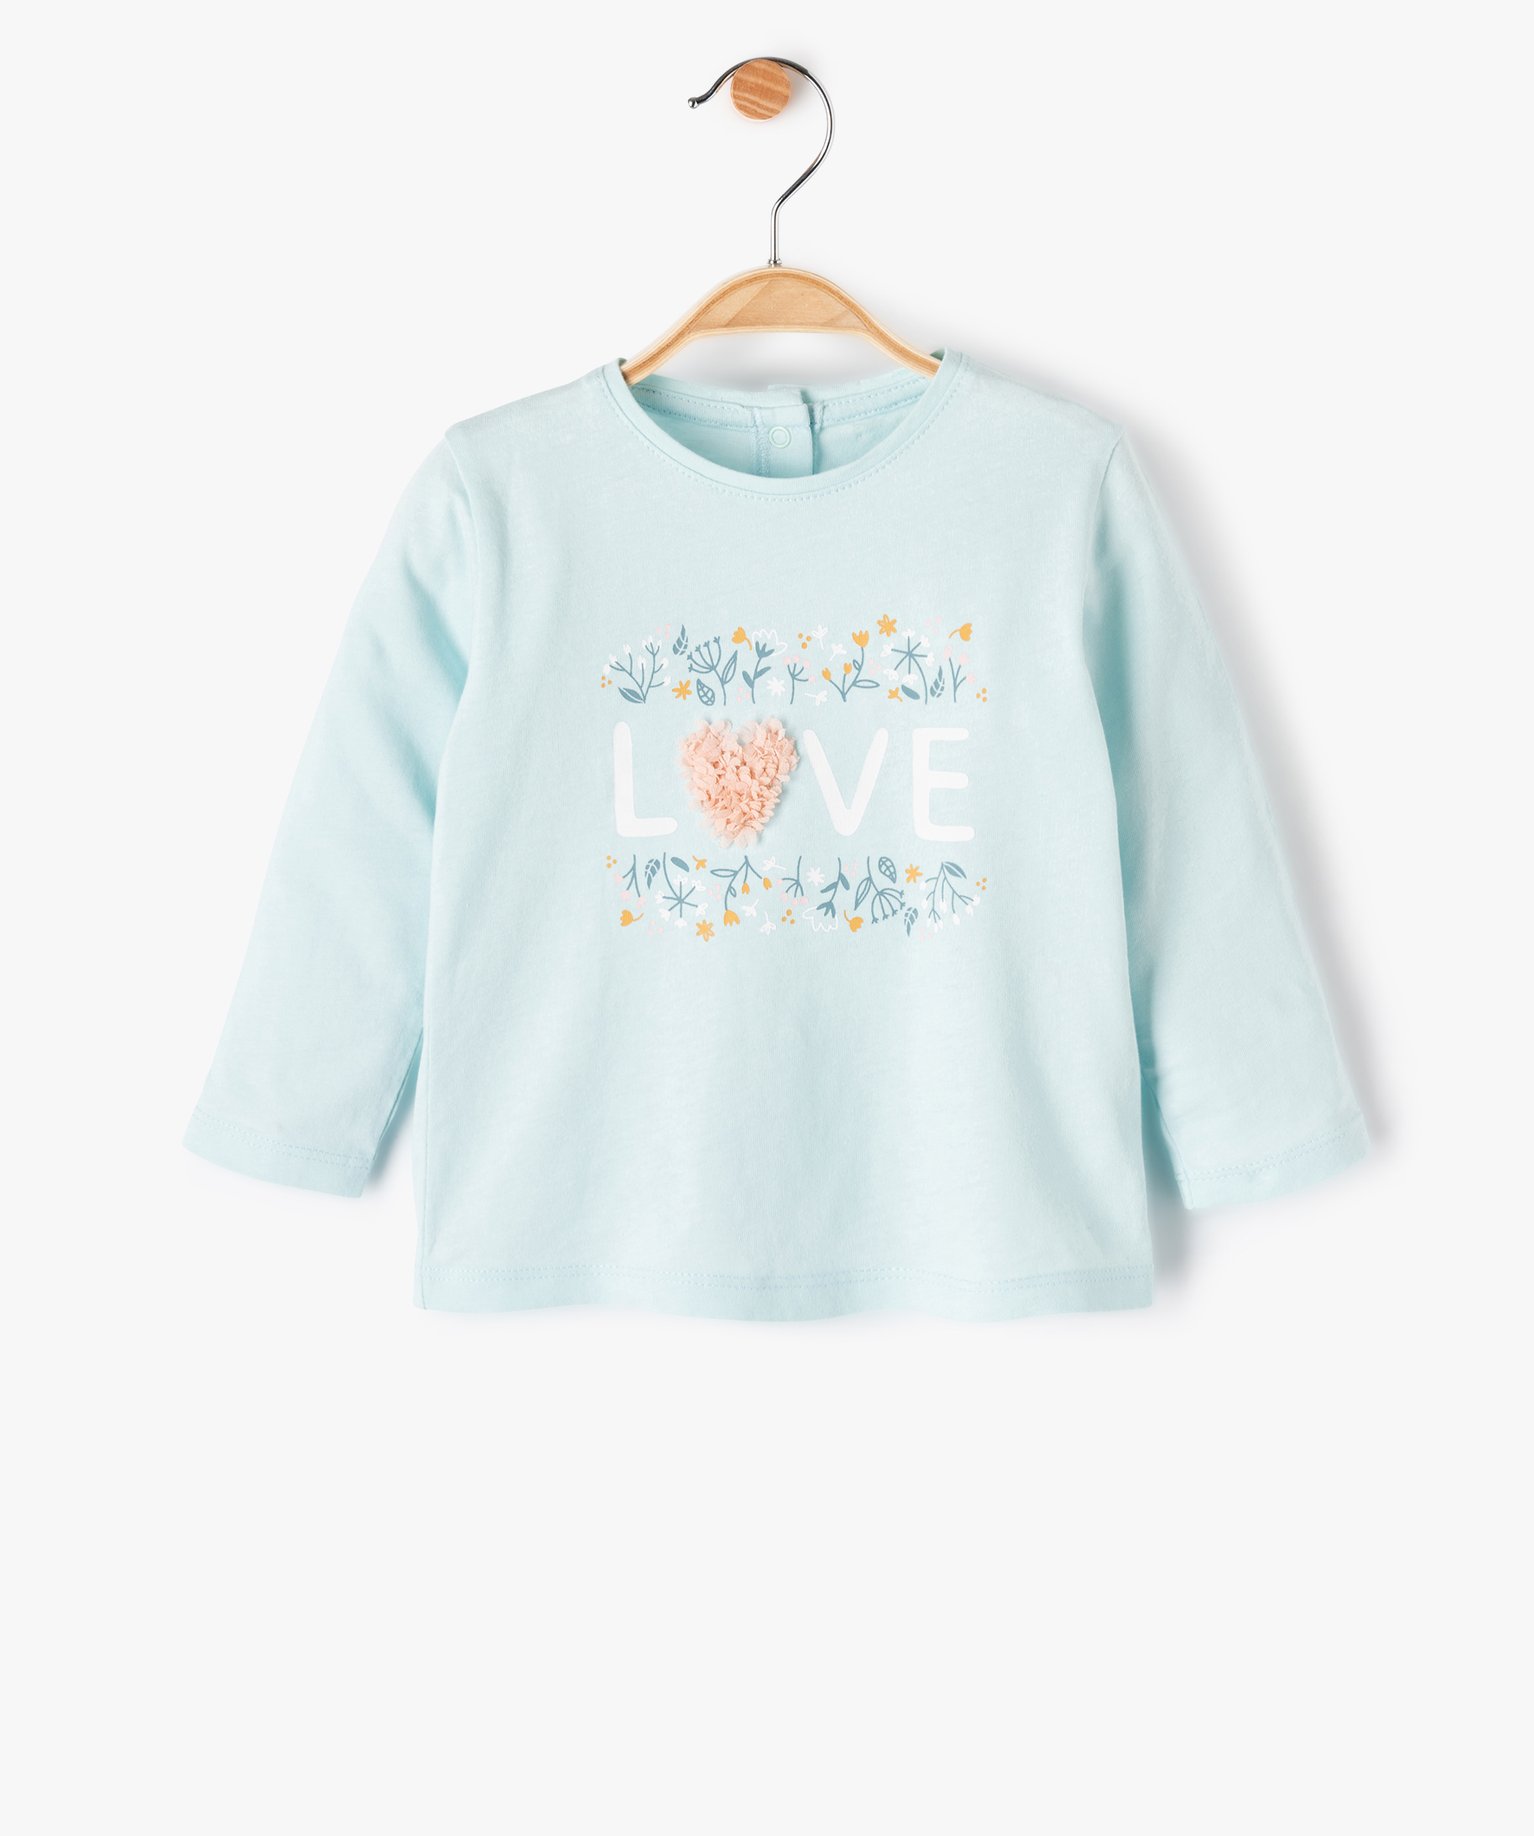 tee-shirt bebe fille avec motif fleuri en relief bleu